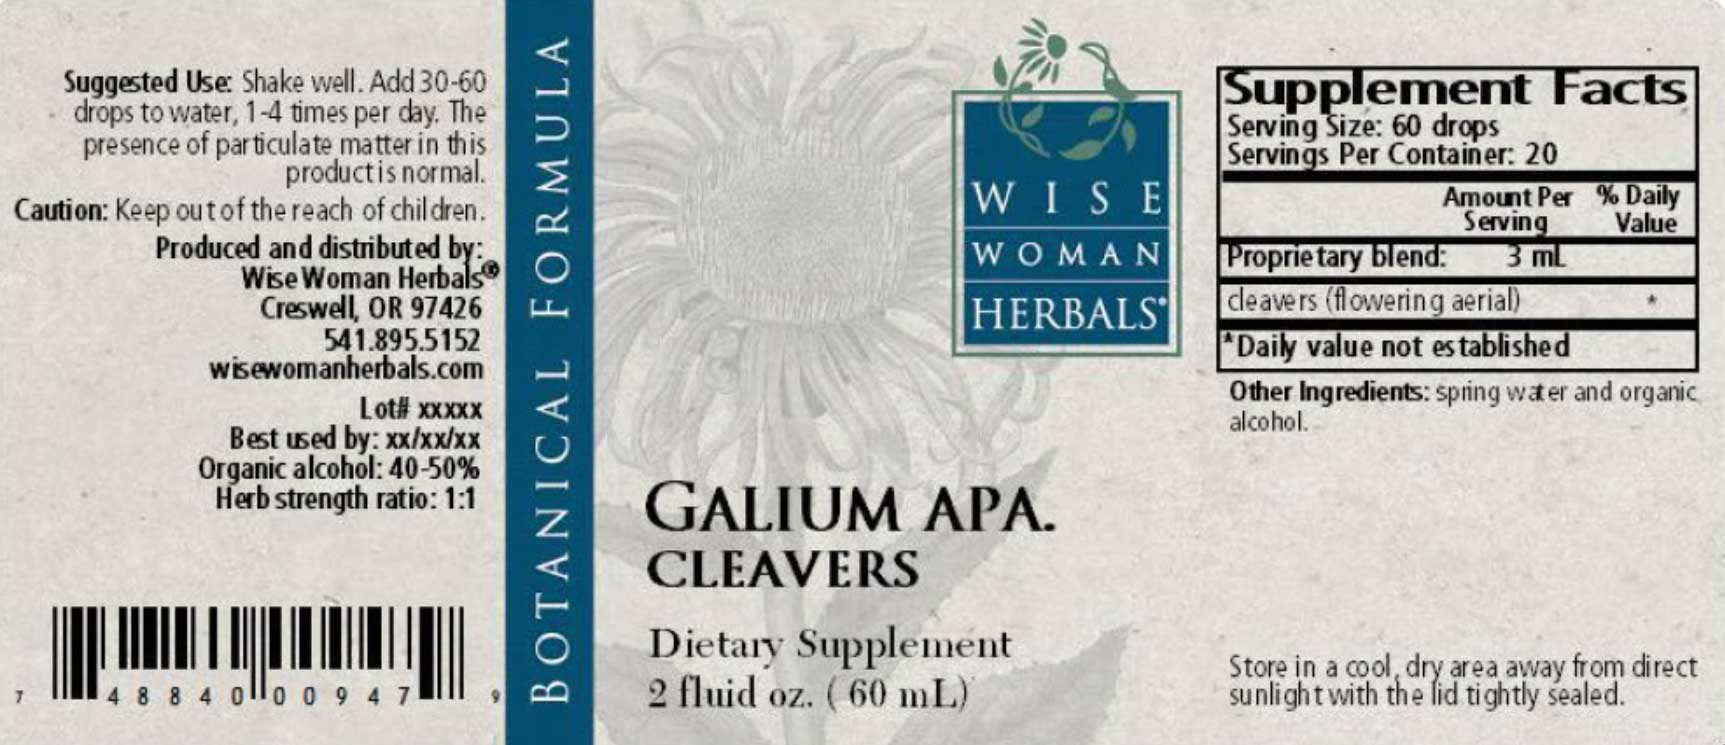 Wise Woman Herbals Galium Aparine Cleavers Label